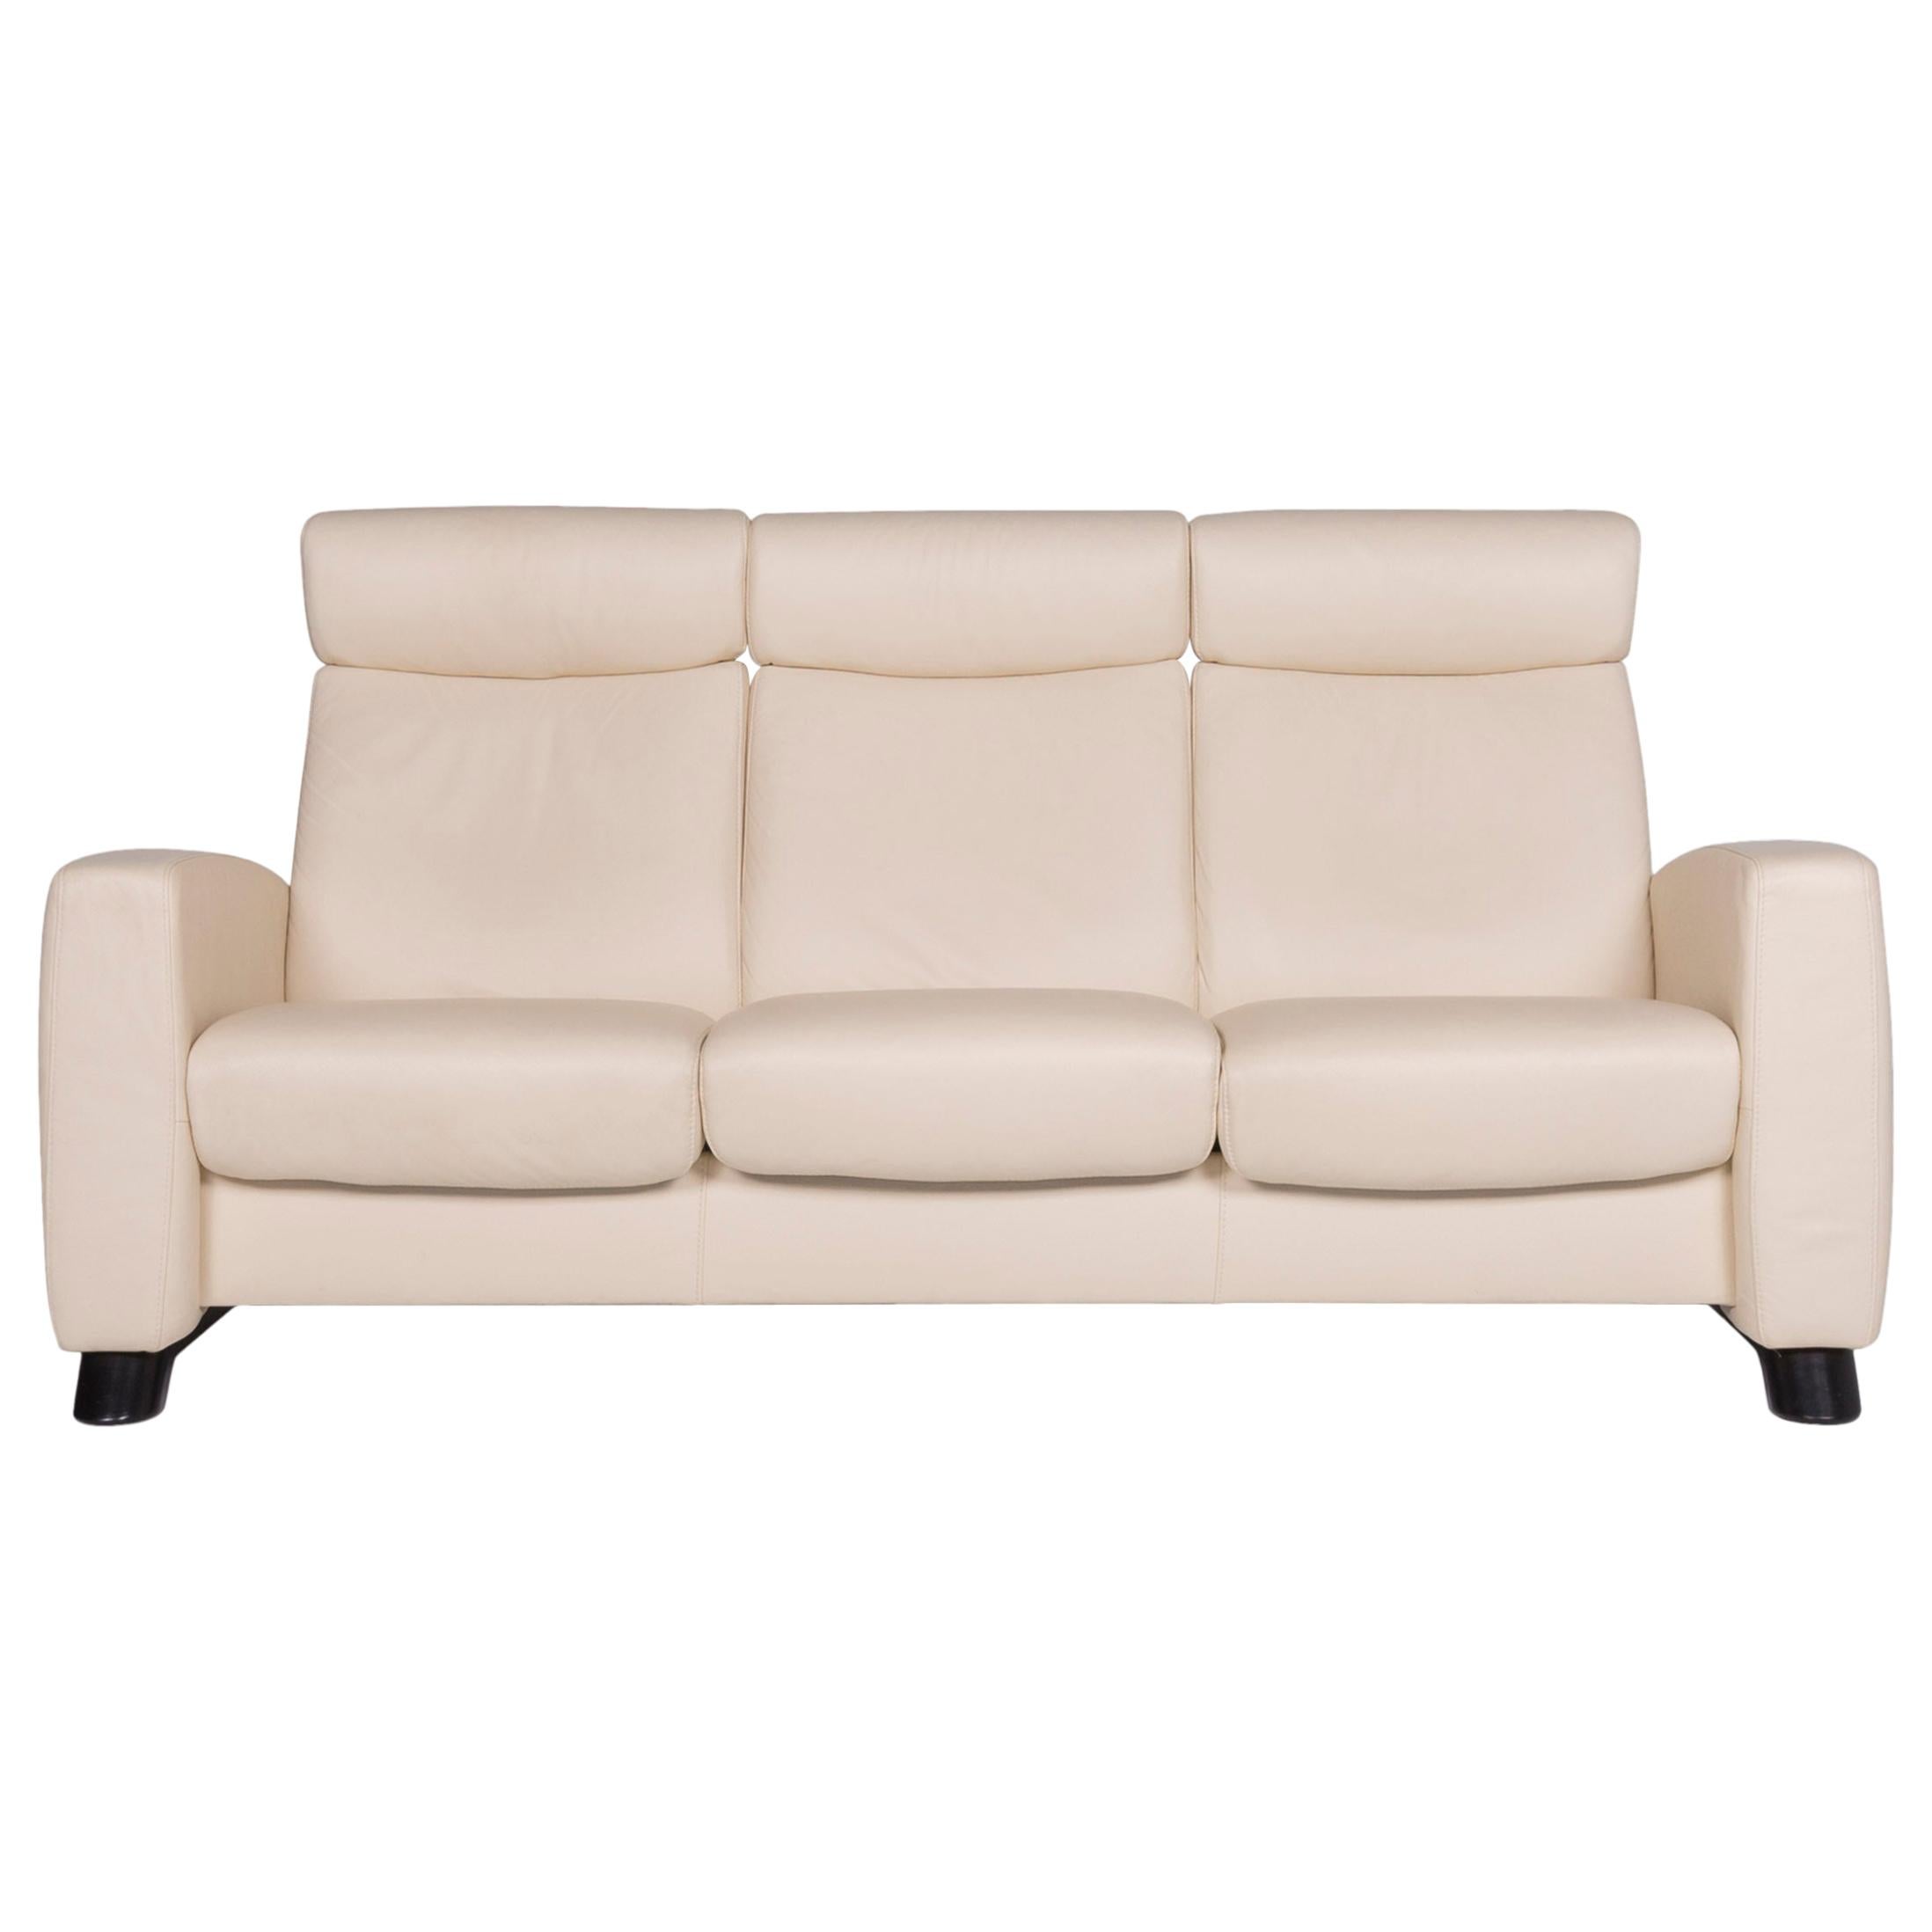 Stressless Arion Leather Sofa Beige Three-Seat